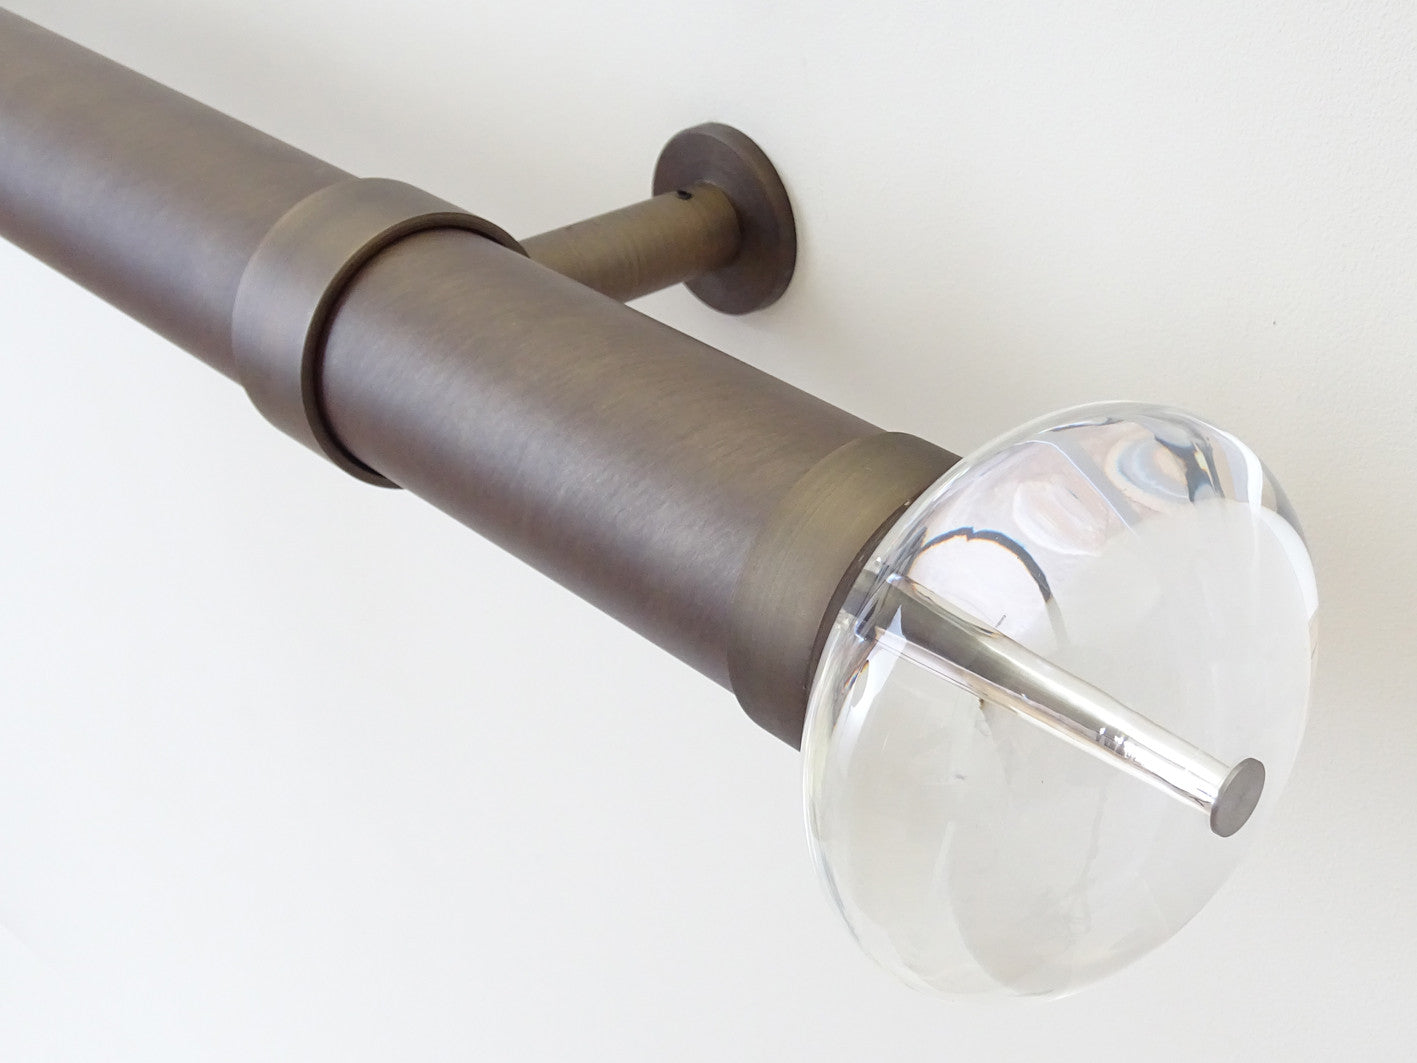 Acryllic ellipse finial mounted on matching 50 mm pole